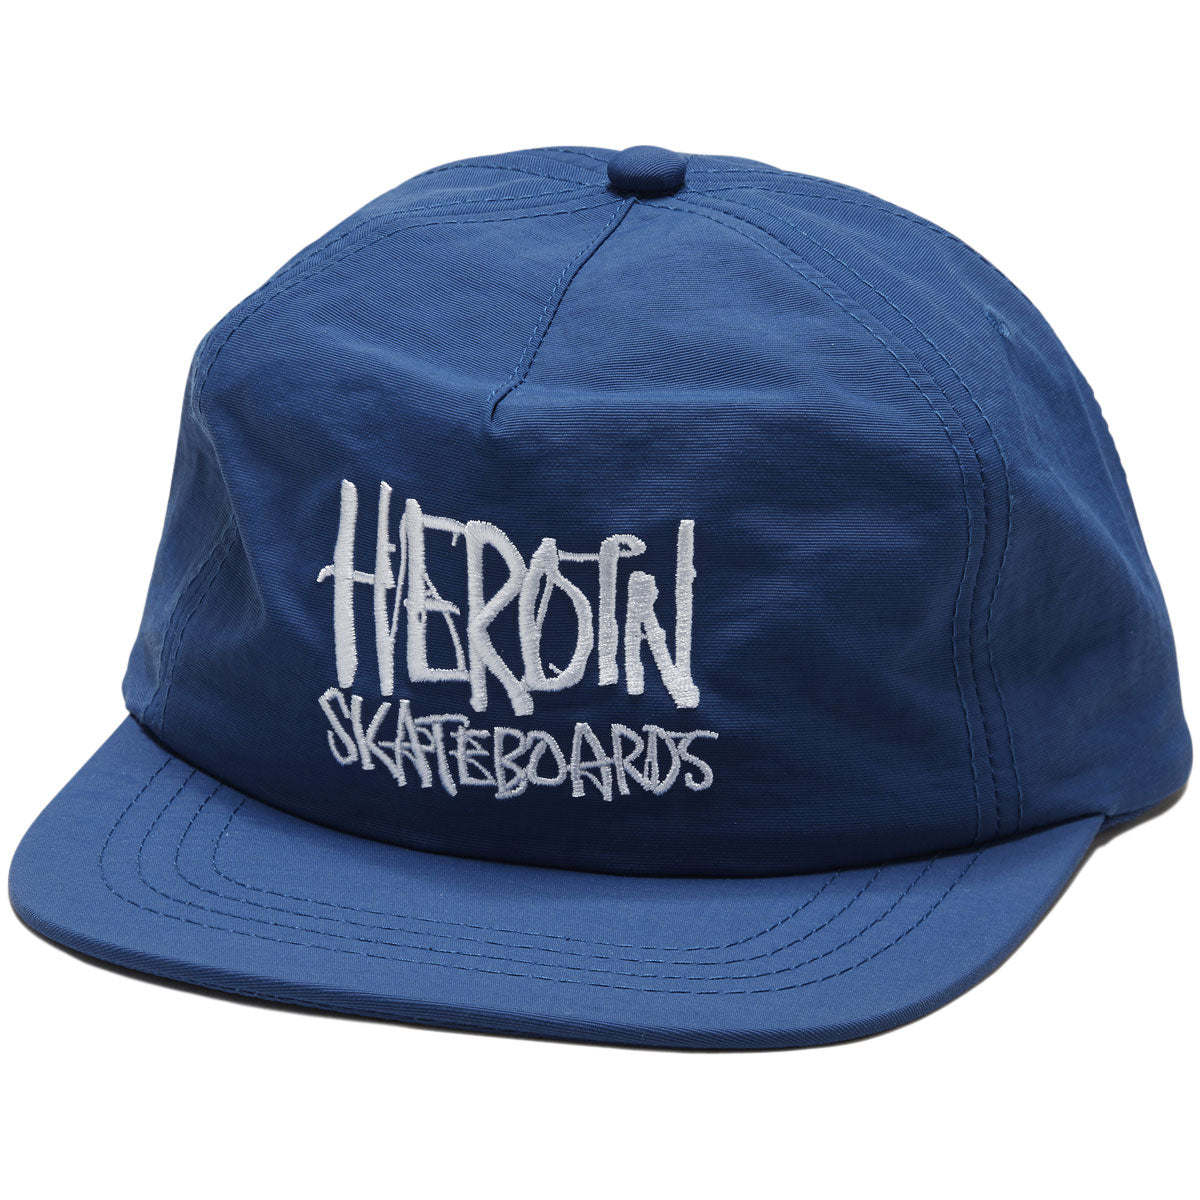 Heroin Script Nylon Snapback Hat - Blue image 1